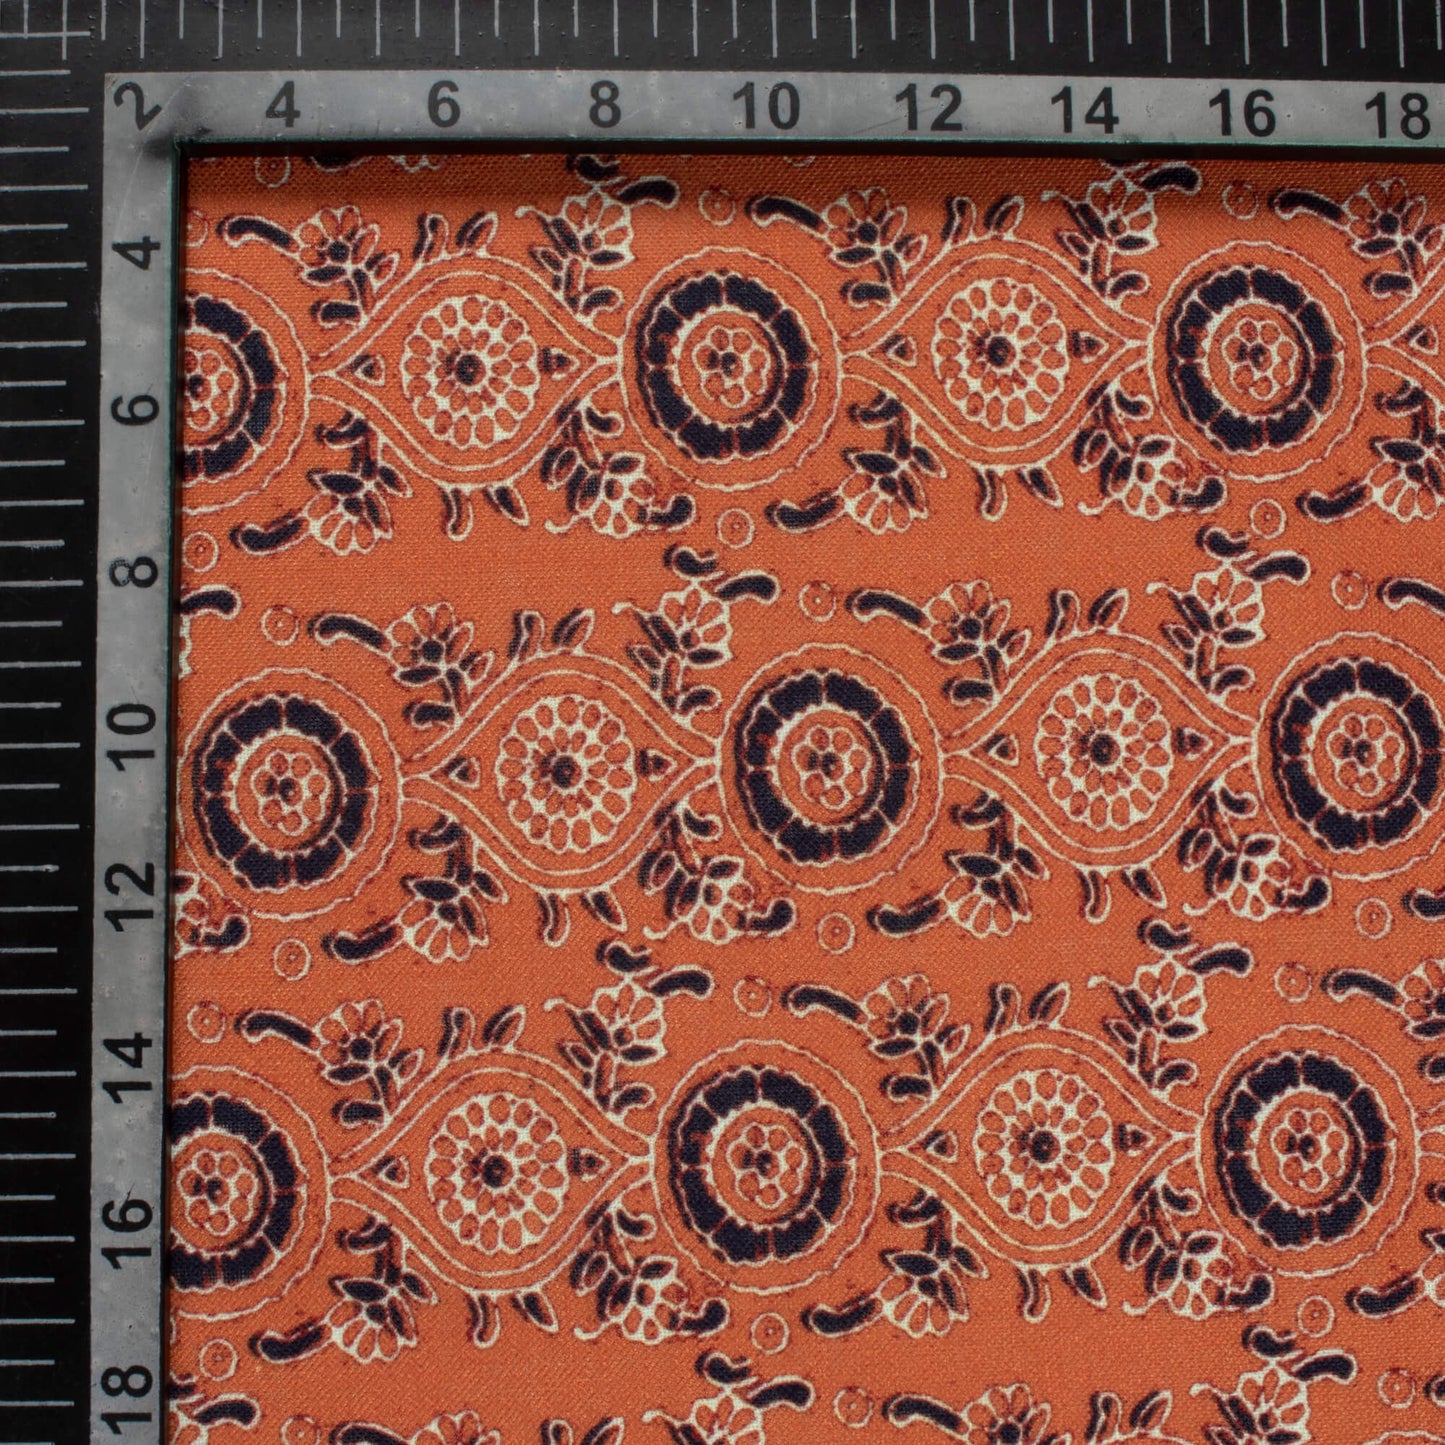 Burnt Orange And Black Ajrakh Pattern Digital Print Linen Textured Fabric (Width 56 Inches)